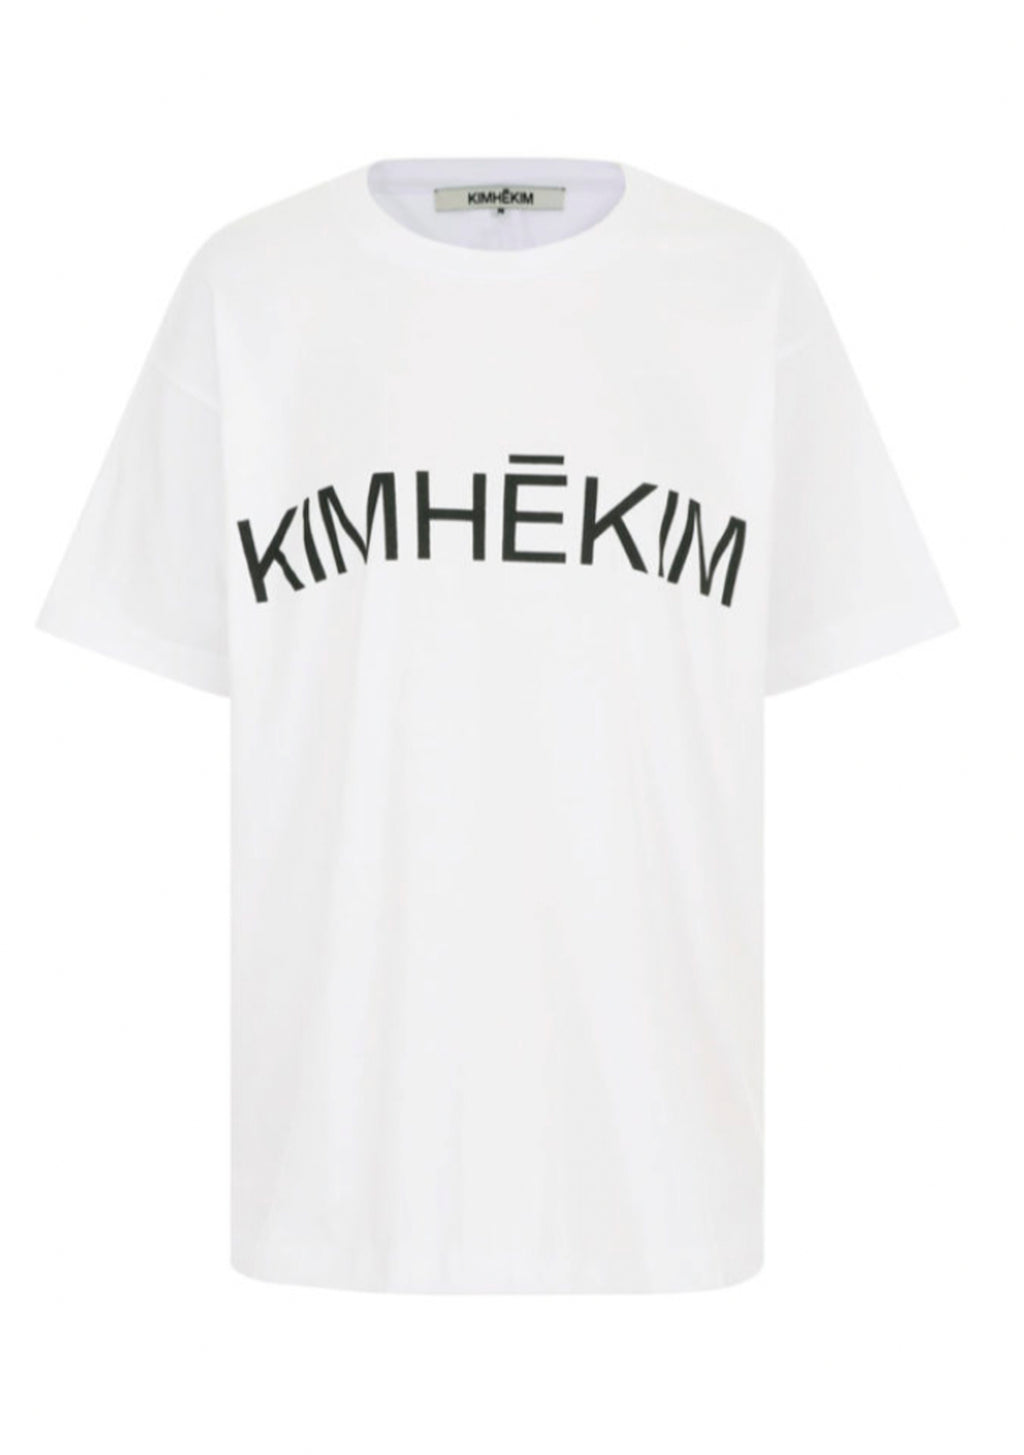 KIMHEKIM T-SHIRTS